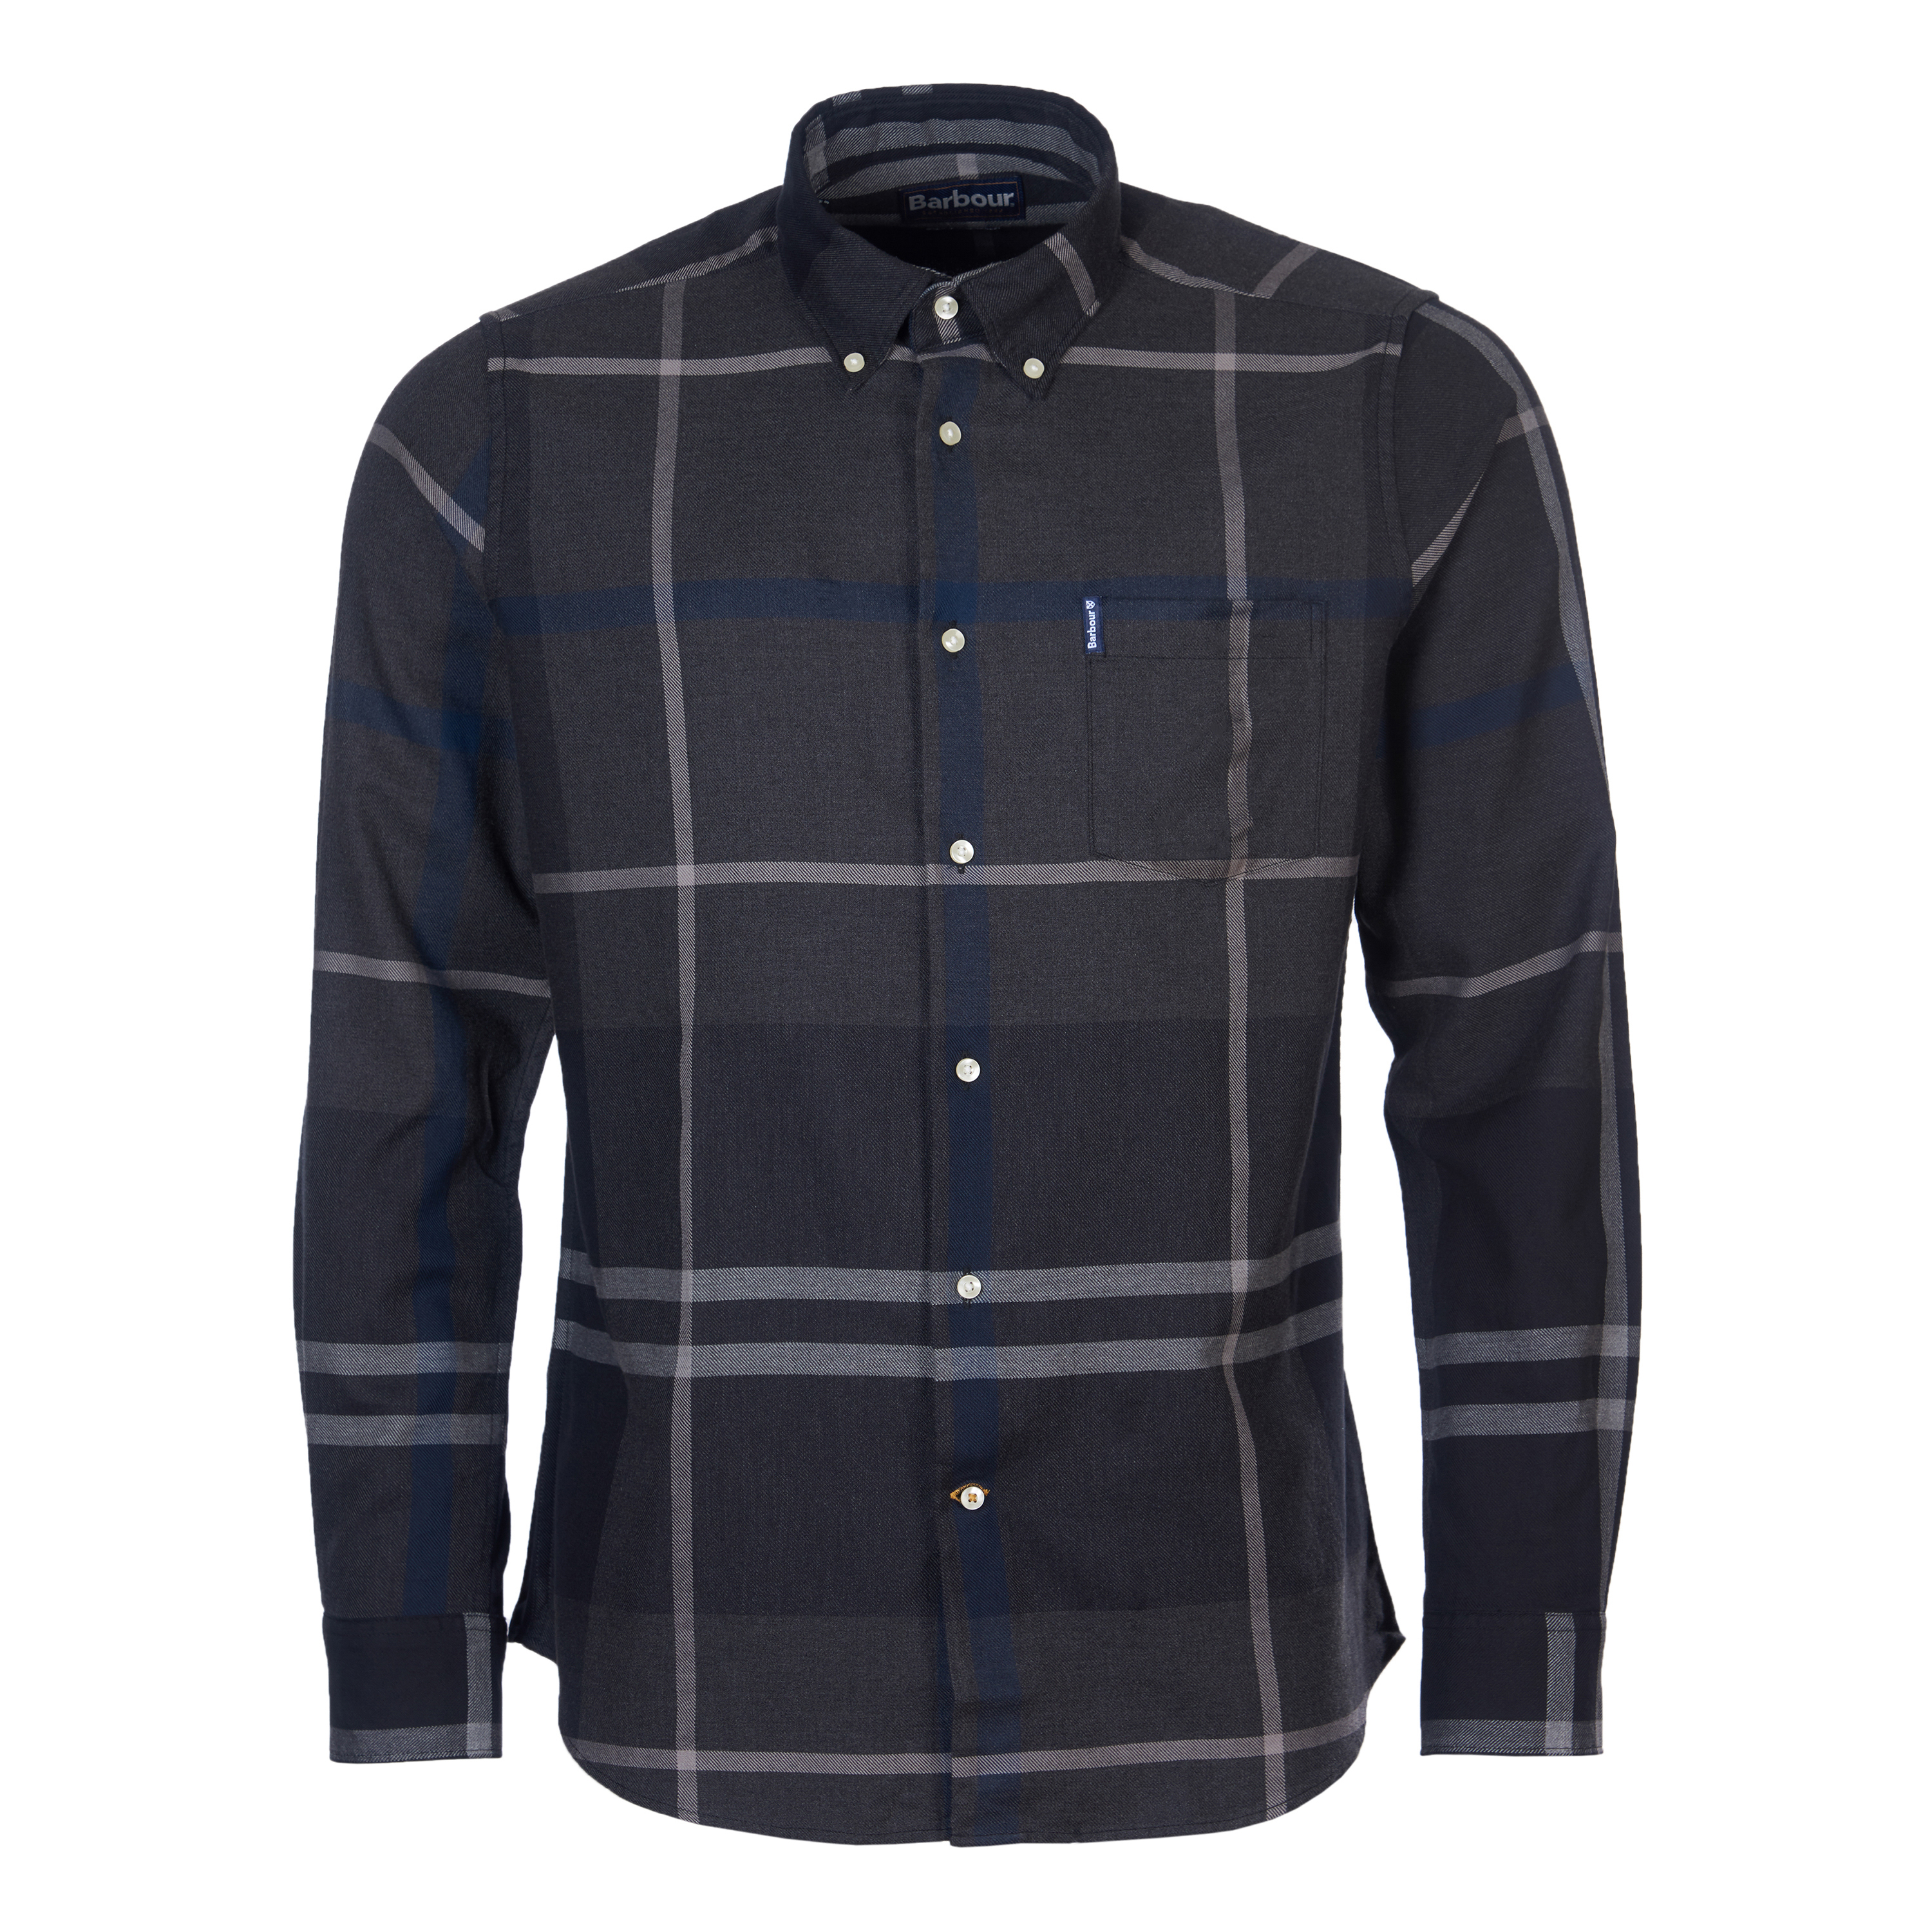 barbour flannel shirt sale